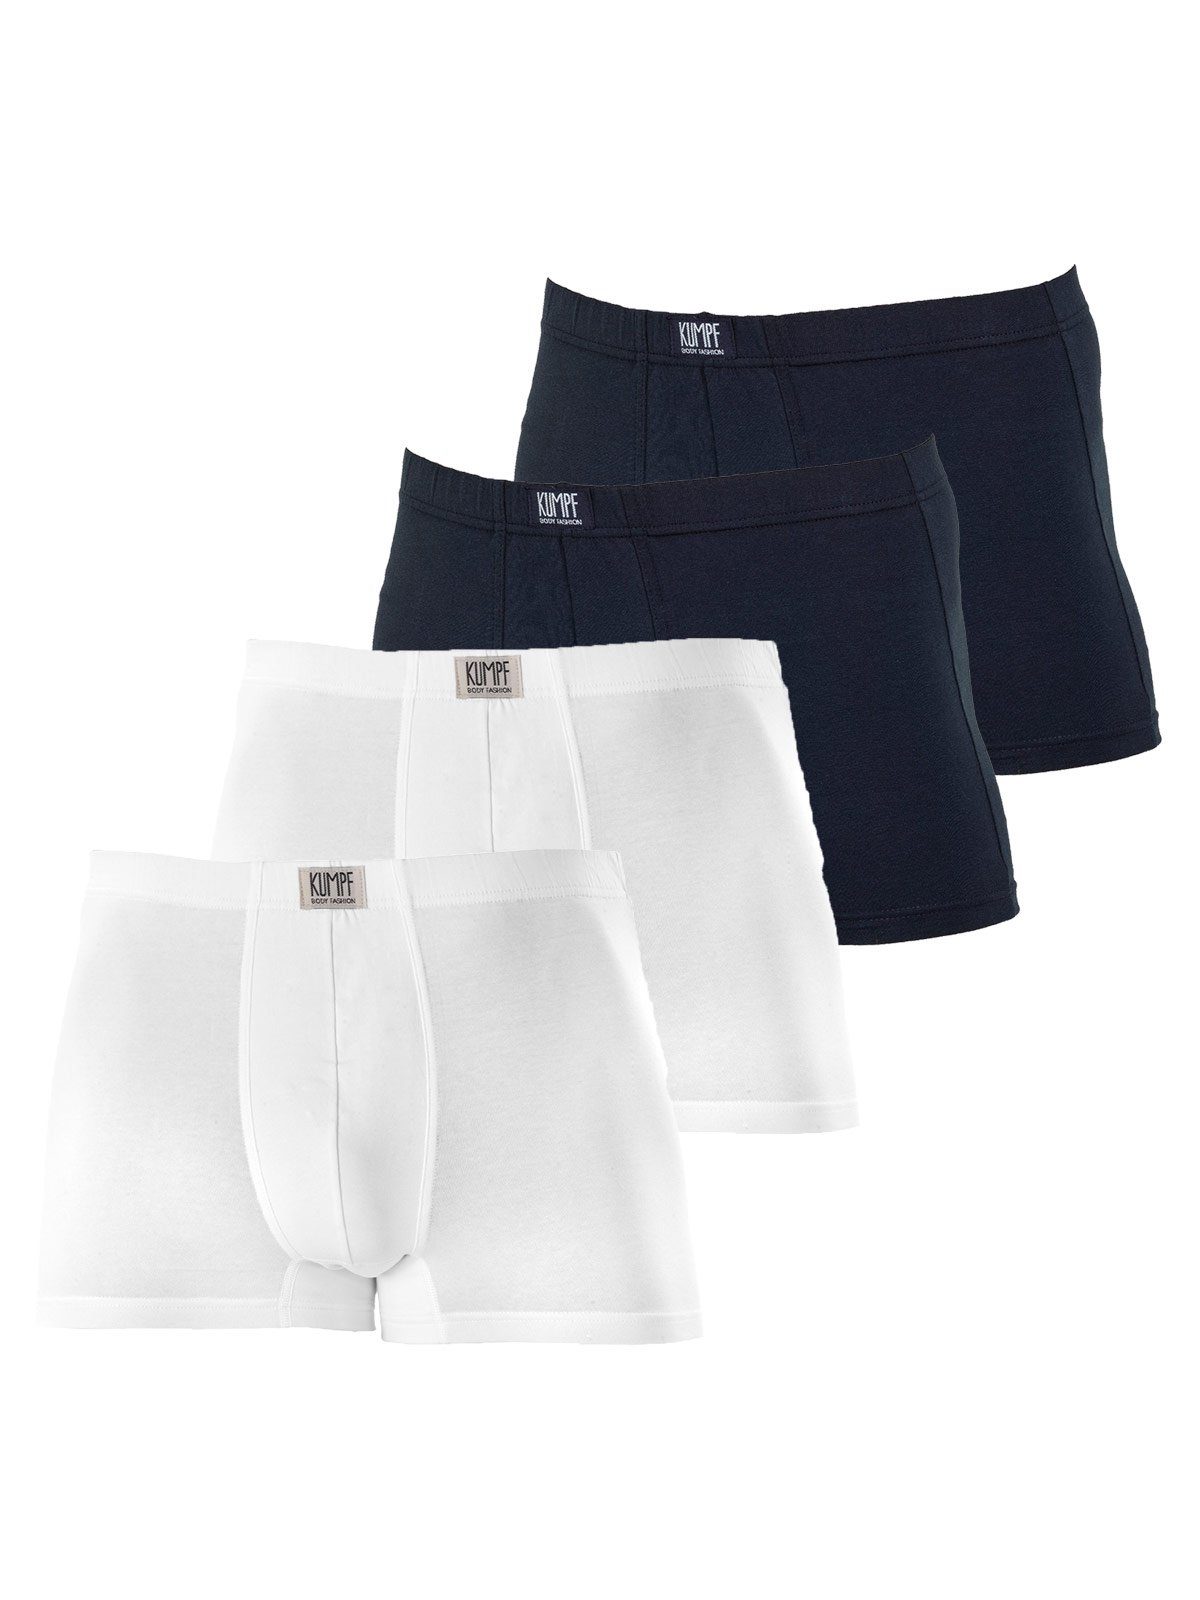 KUMPF Retro Pants 4er Sparpack Herren Pants Bio Cotton (Spar-Set, 4-St) hohe Markenqualität navy weiss